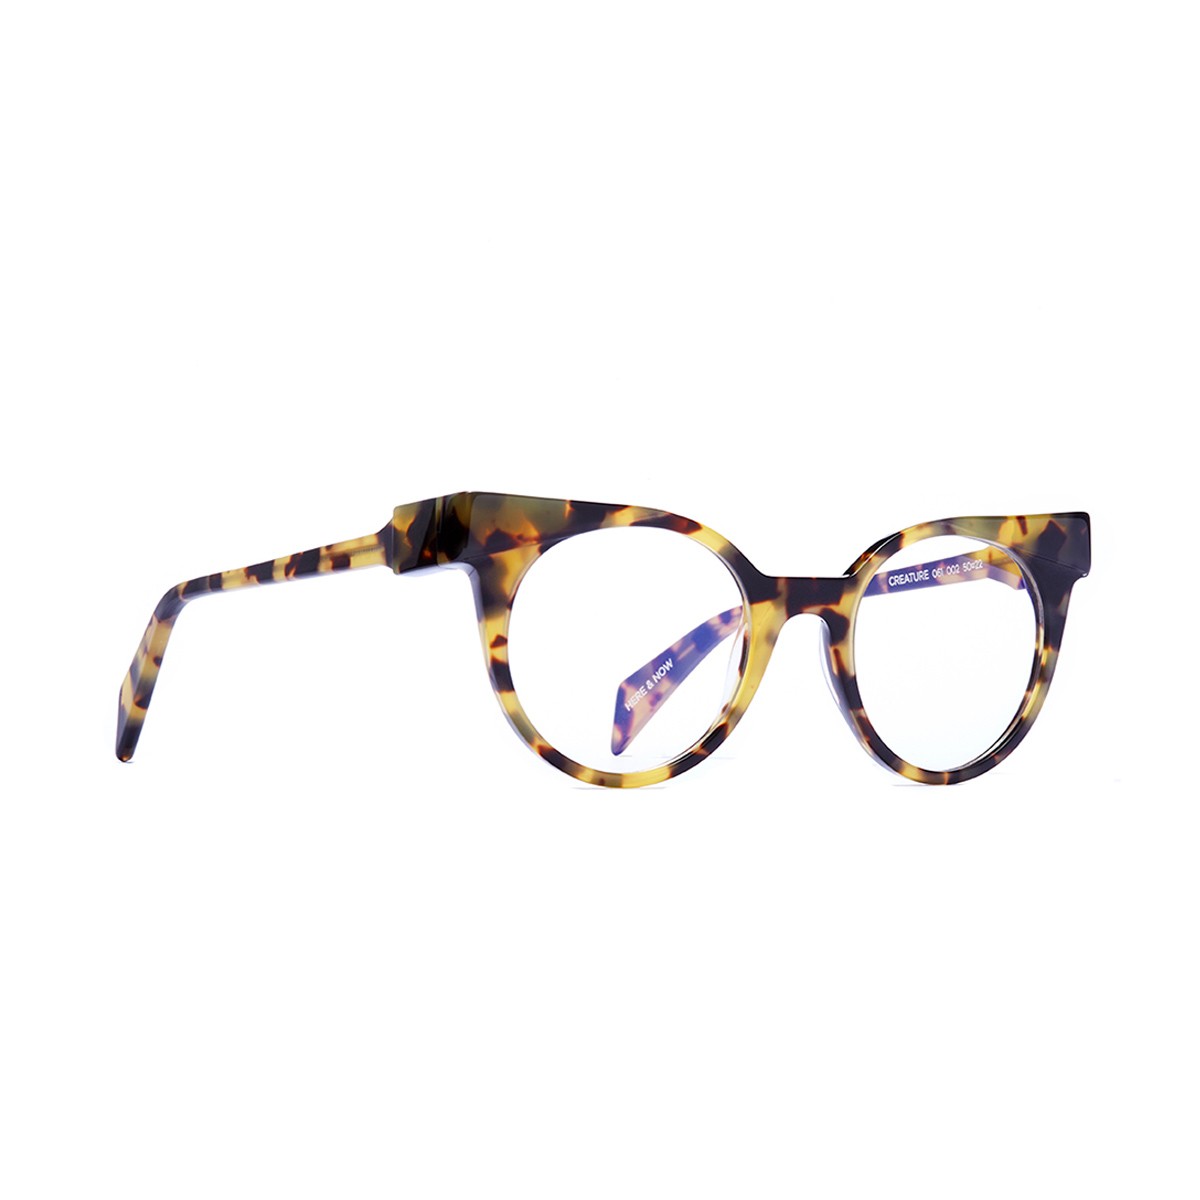 SIENS CREATURE 061 | Unisex eyeglasses